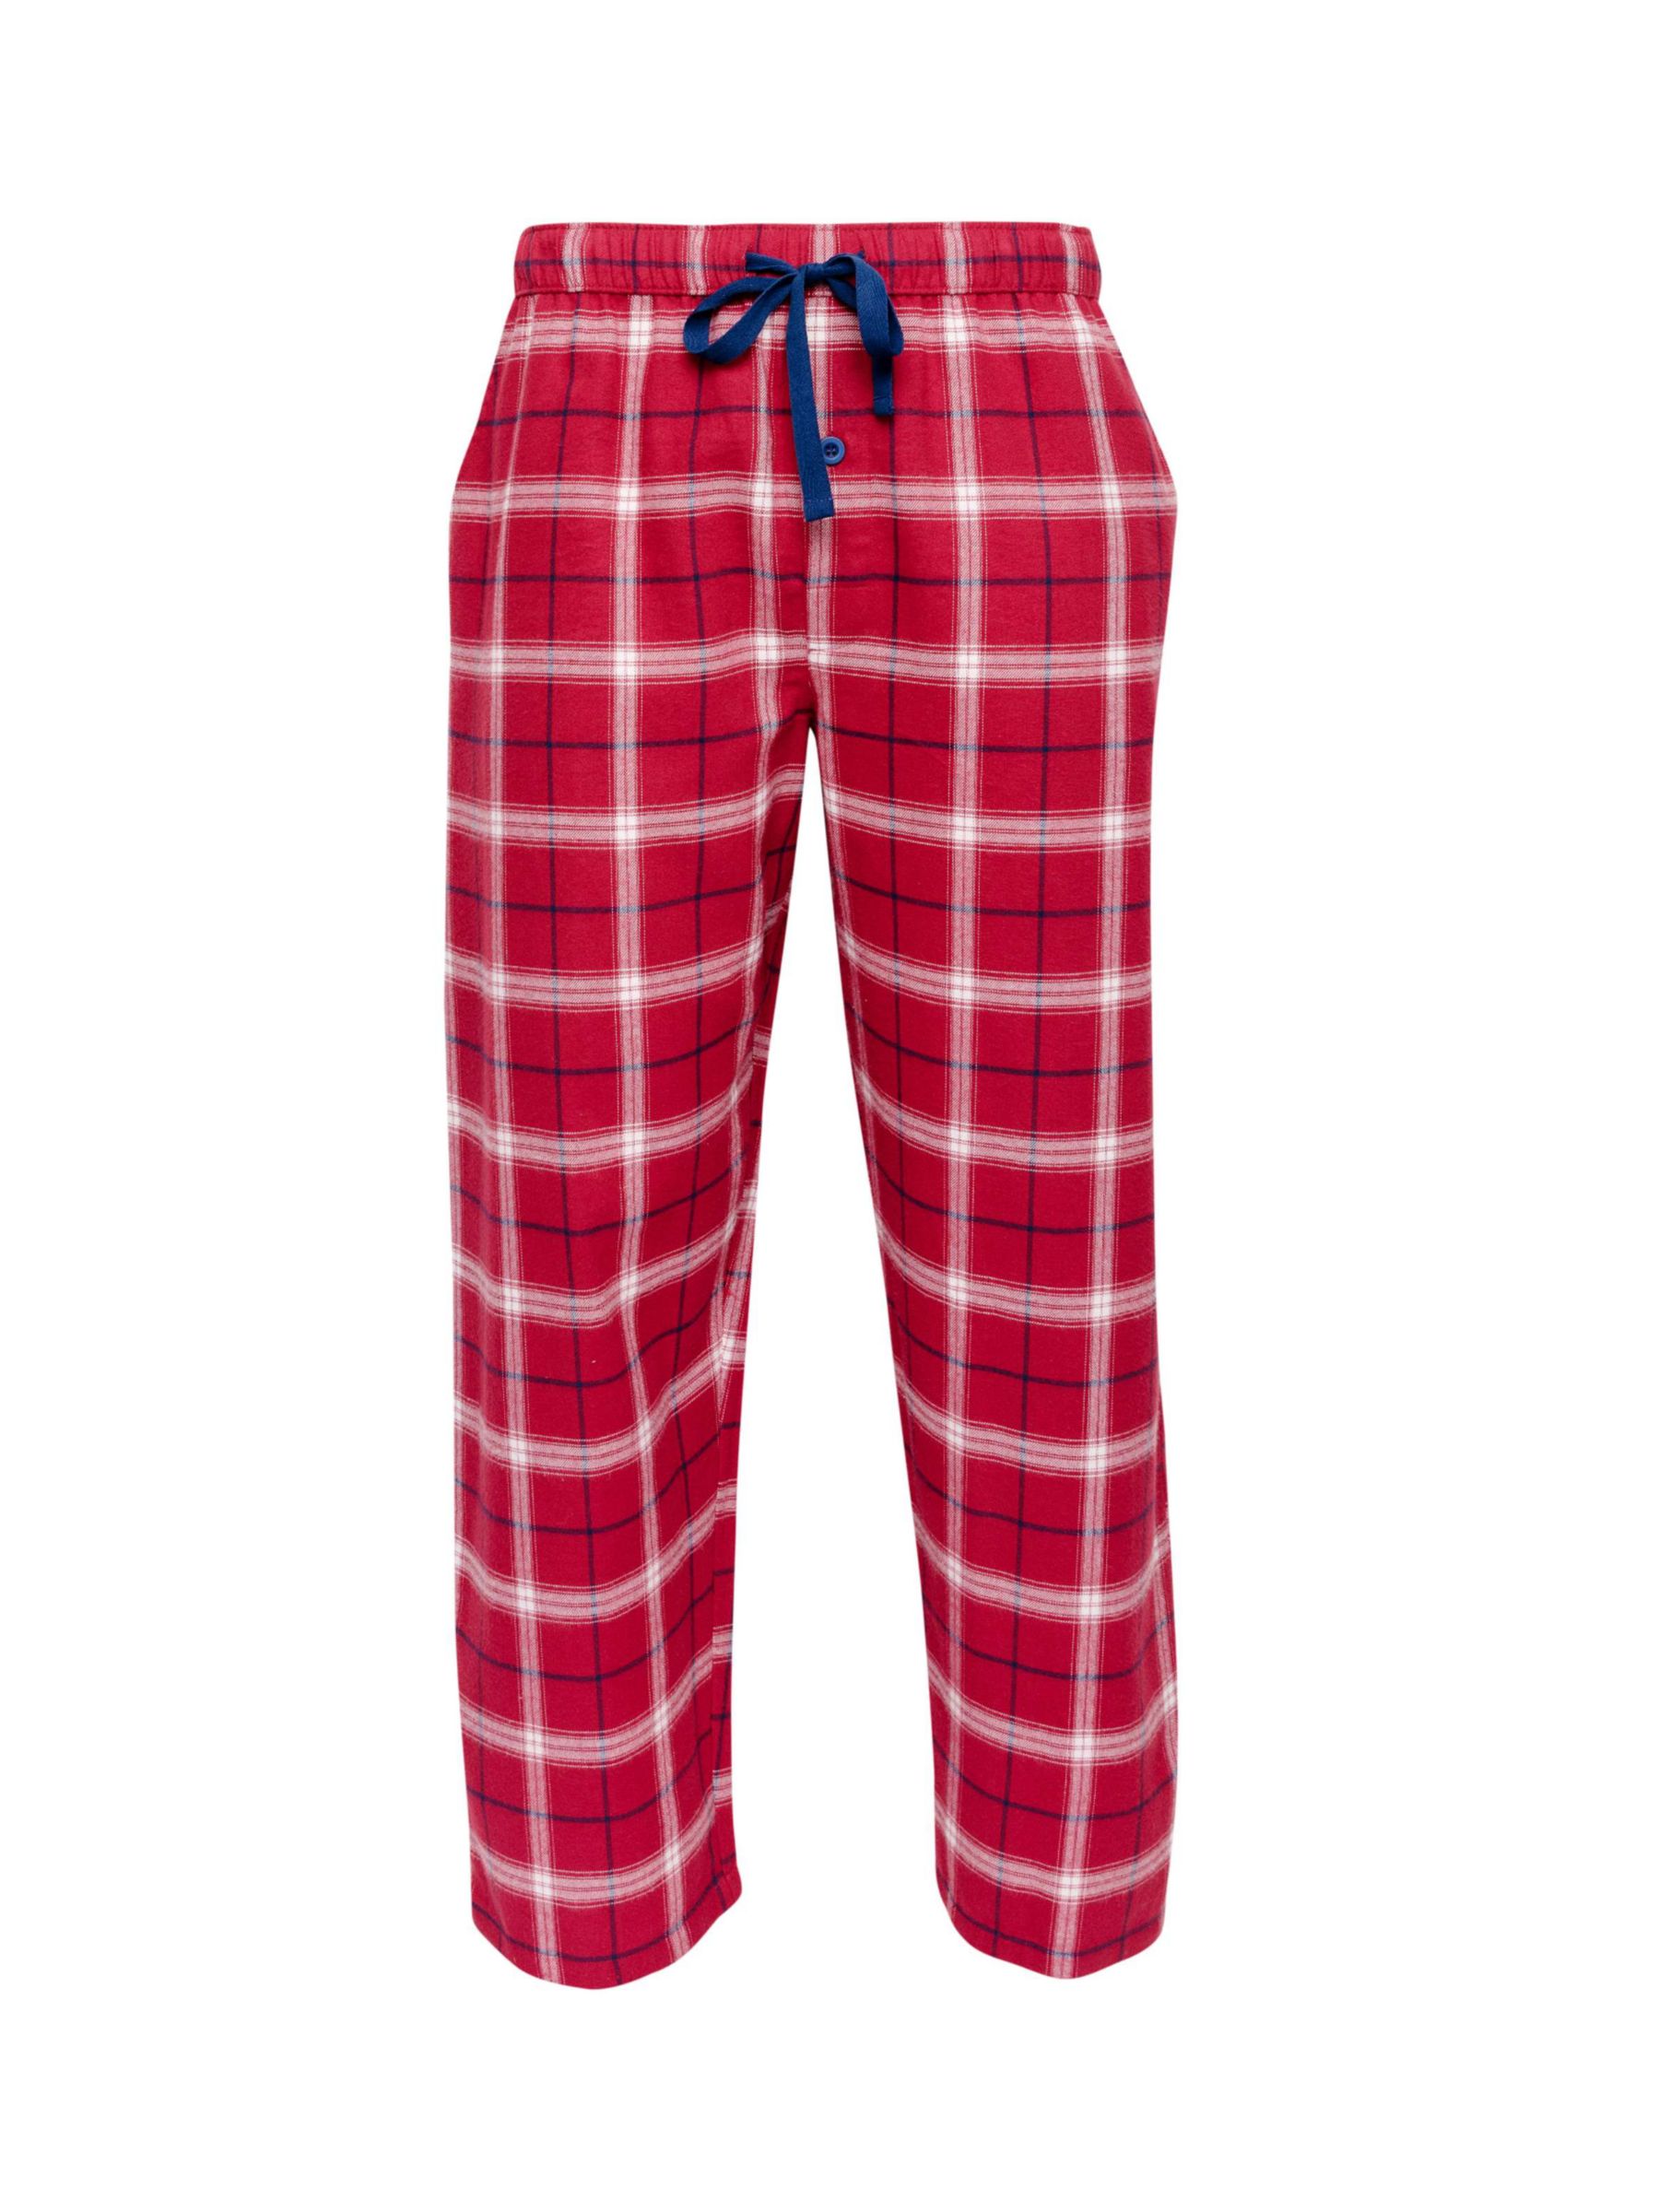 Cyberjammies Noel Check Pyjama Bottoms, Red/White, S